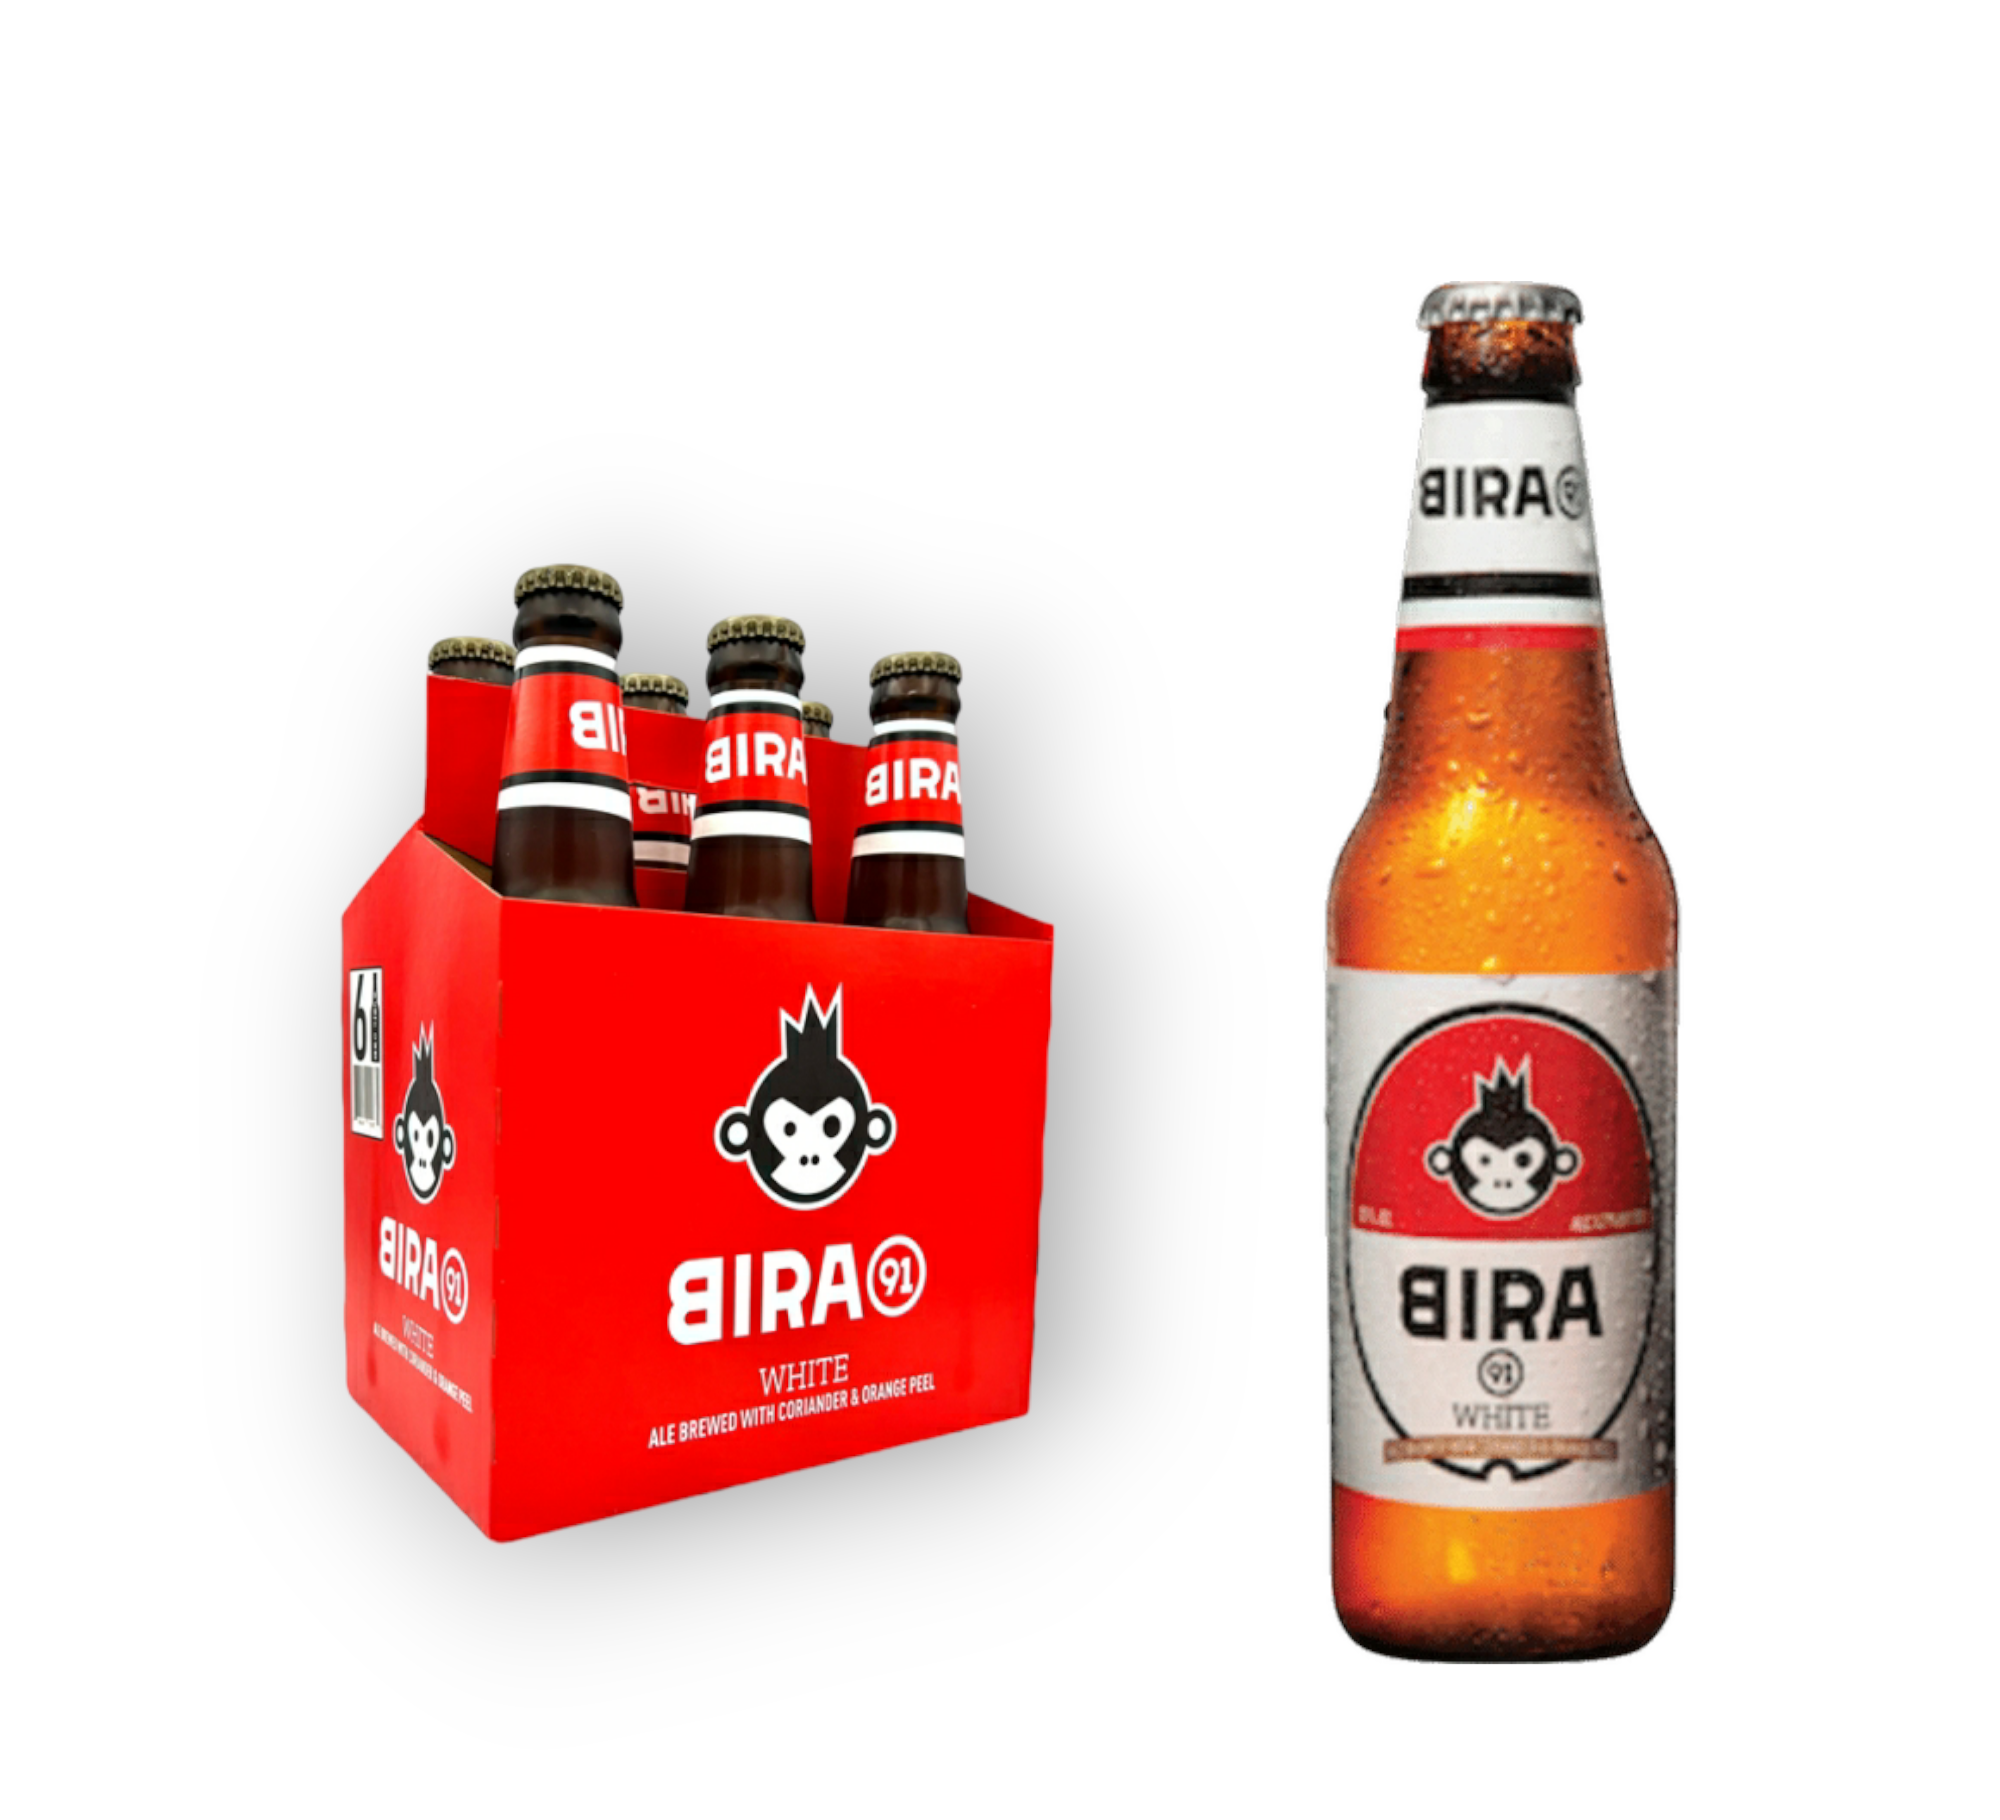 Bira 91 White 0,33l- Wheat Beer mit 4,7% Vol.